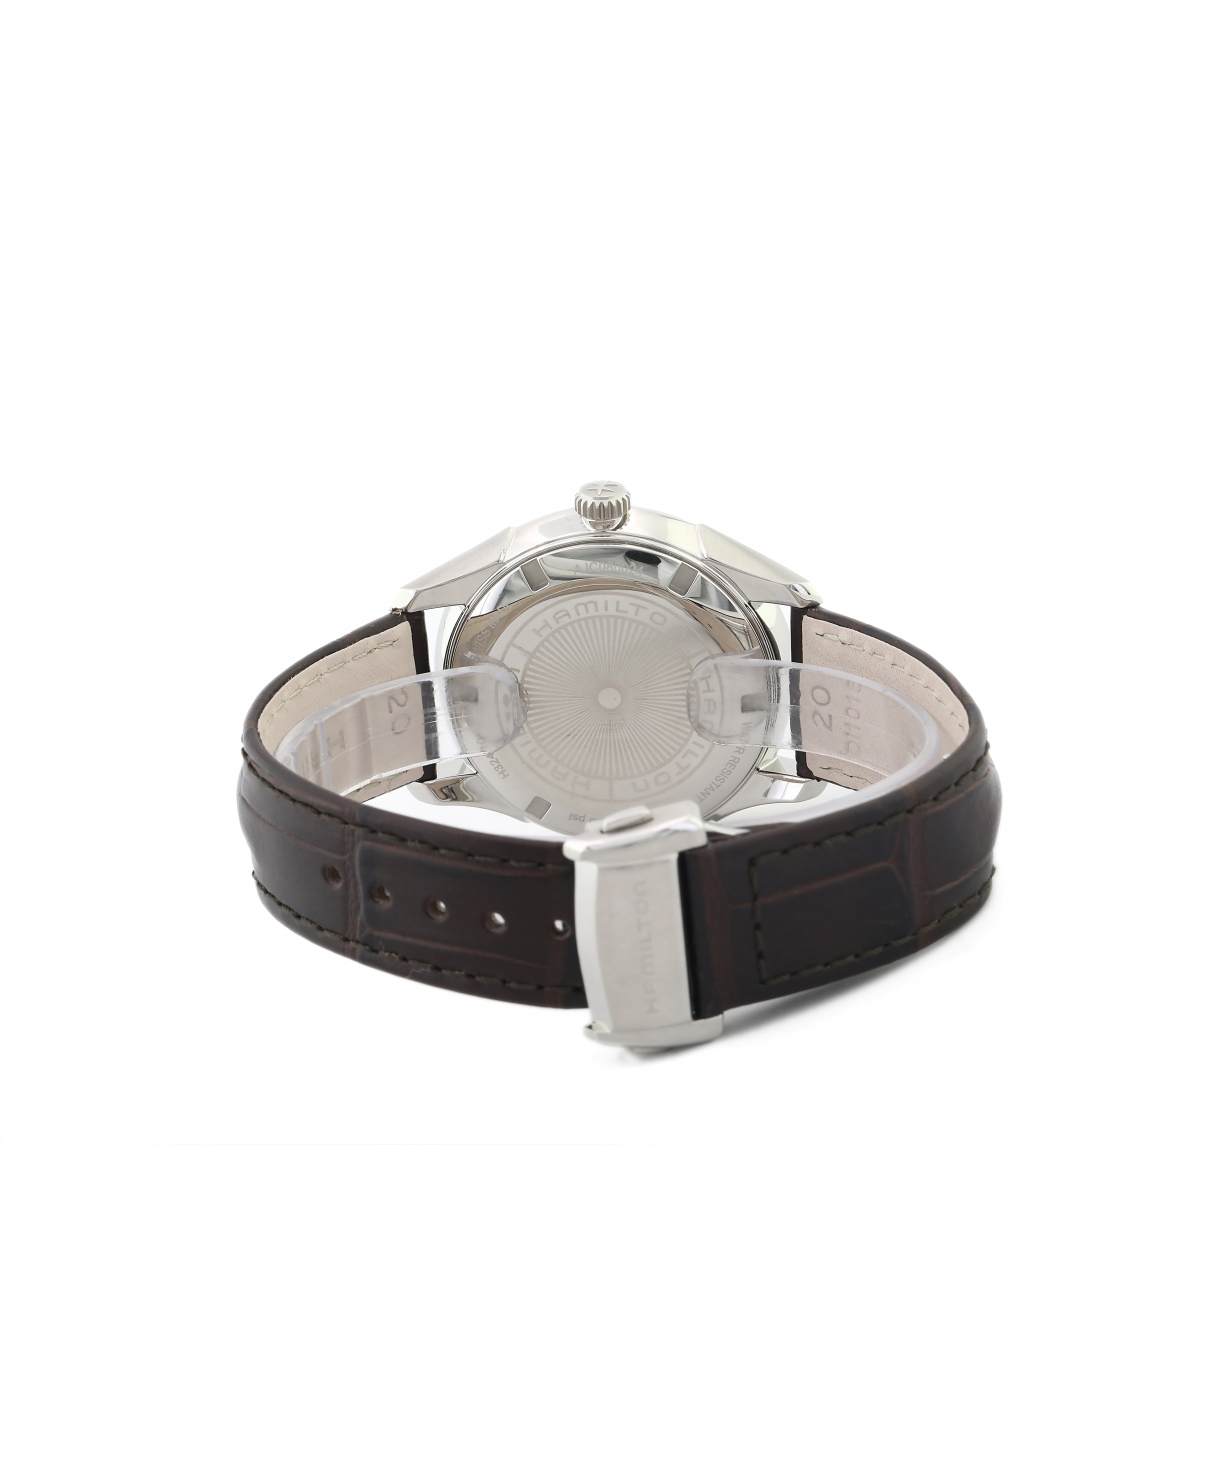 Wristwatch `Hamilton` /H32441551